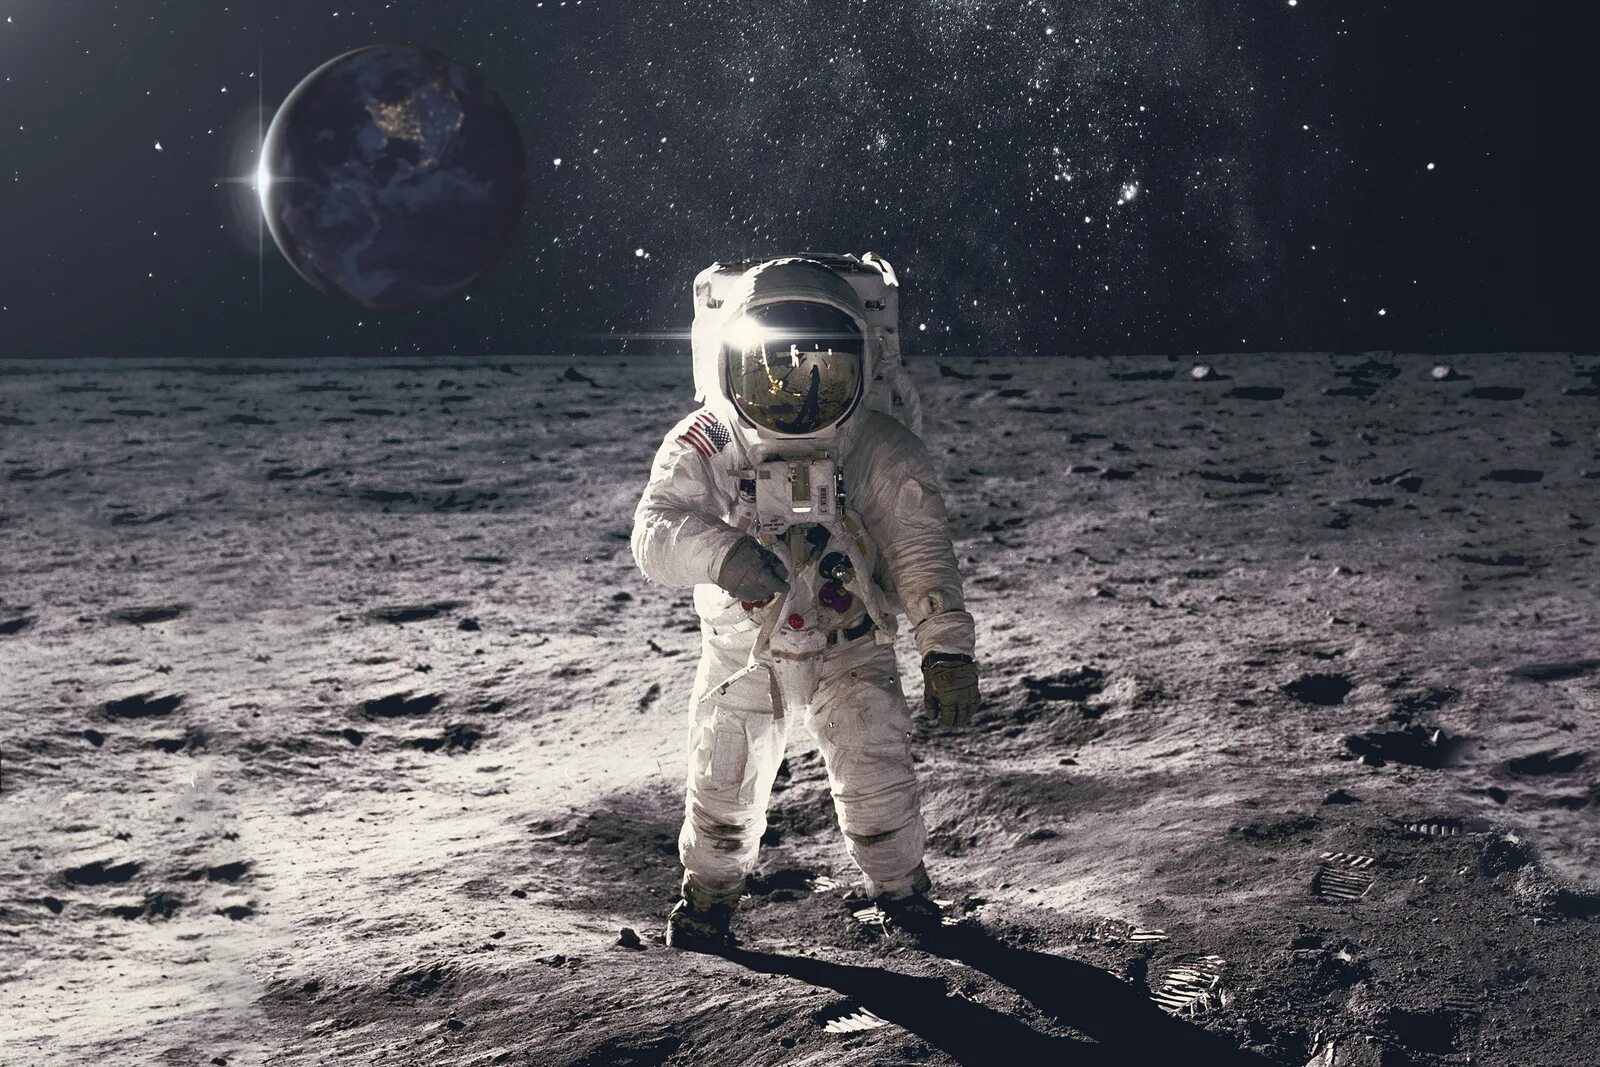 The astronauts on the moon. Скафандр Аполлон 11. Космонавт на Луне. Космонавт в космосе.